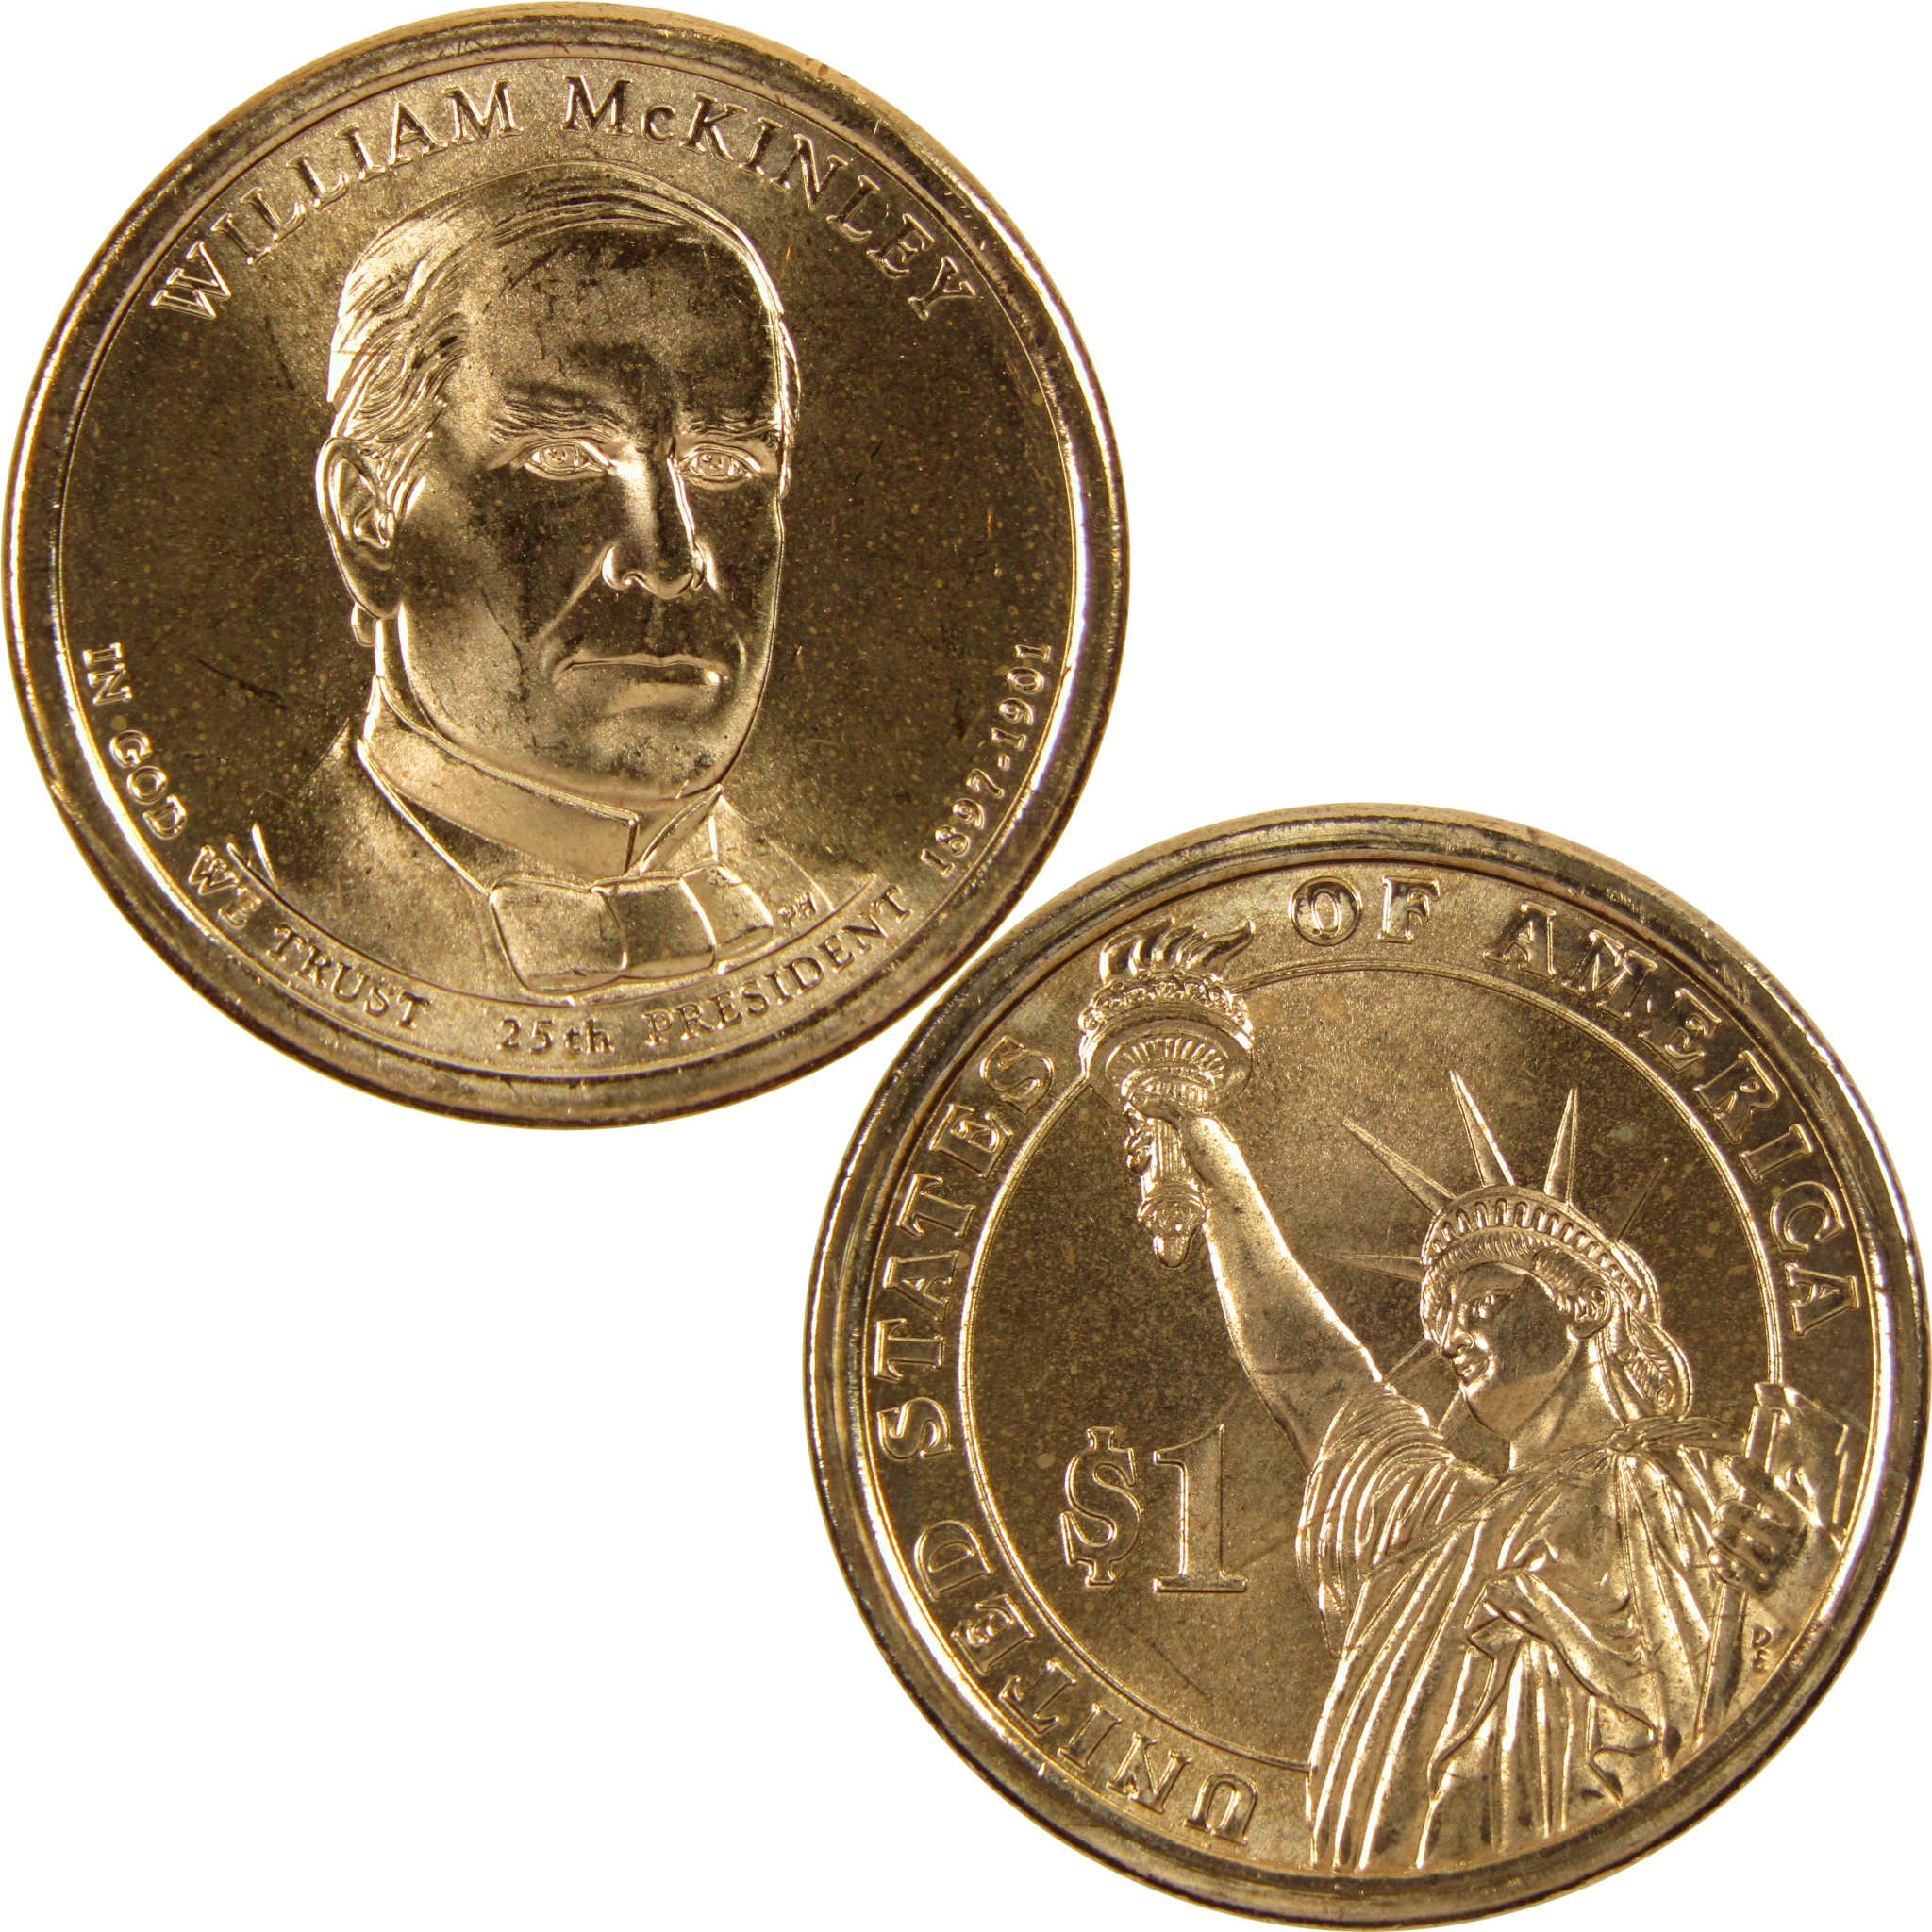 2013 D William McKinley Presidential Dollar BU Uncirculated $1 Coin